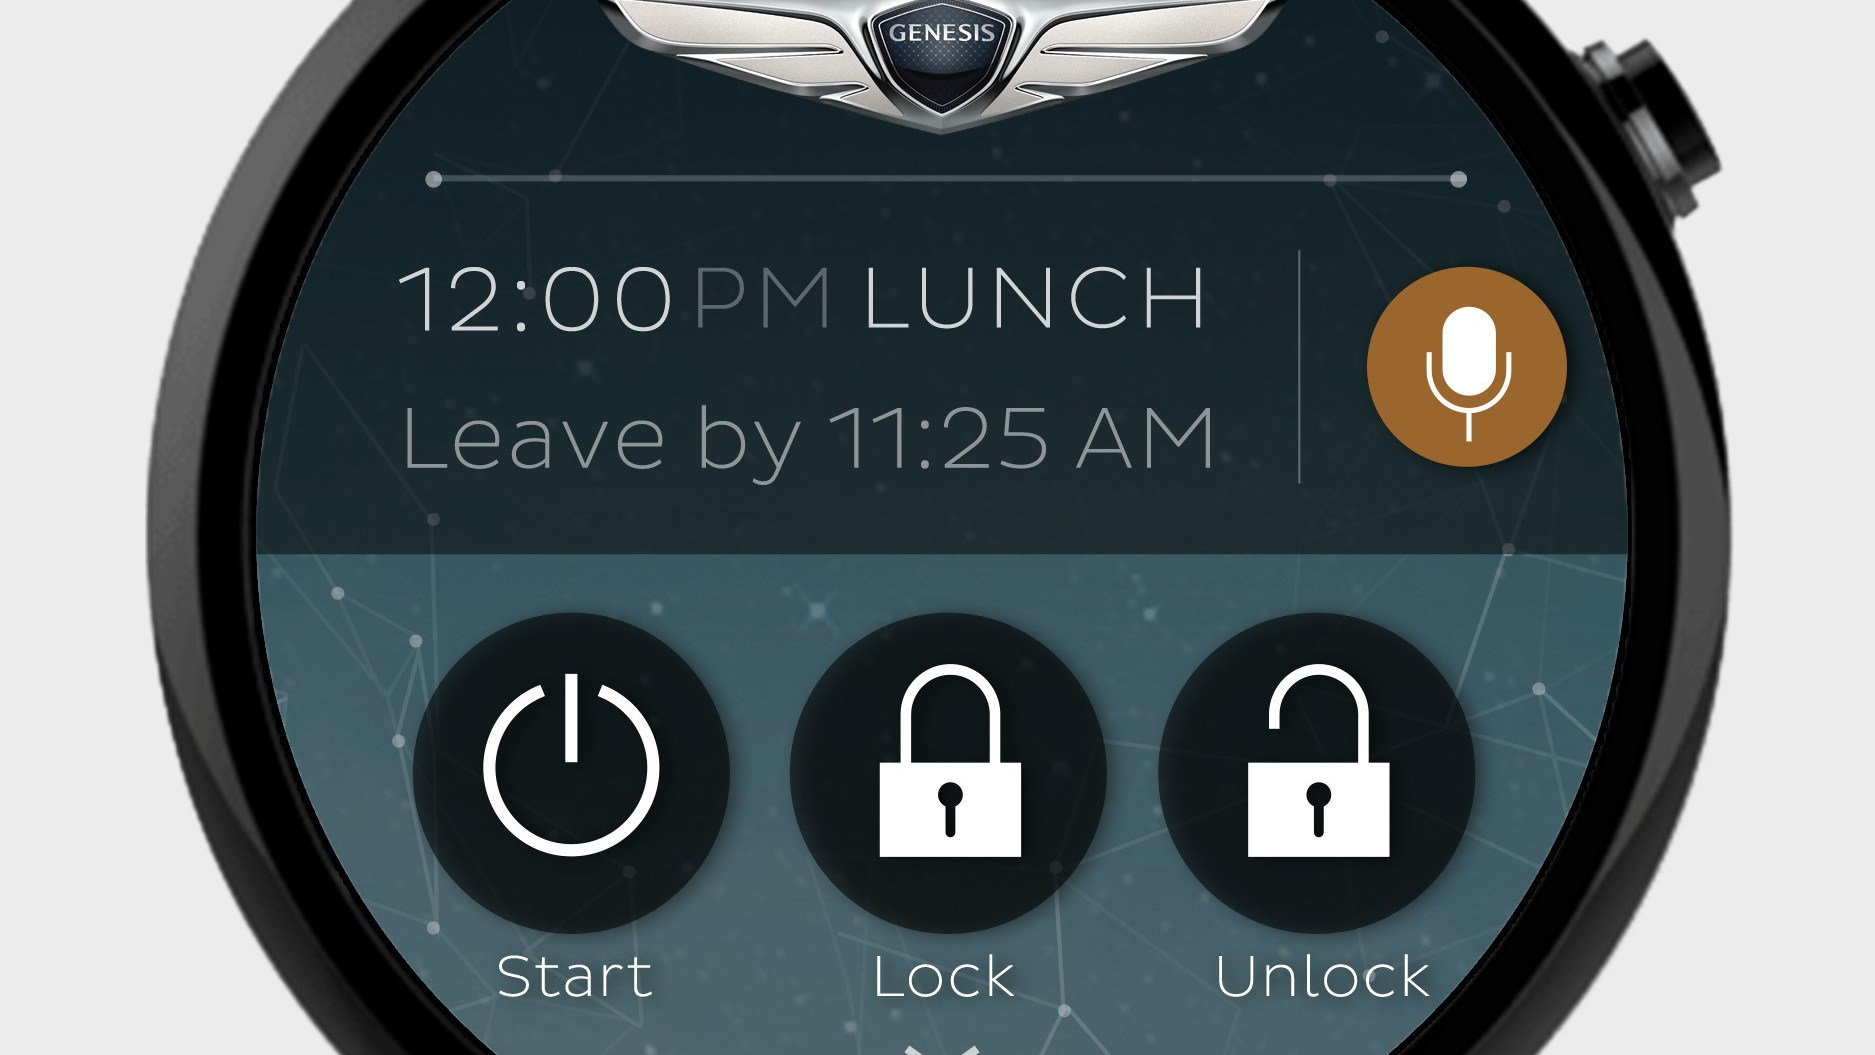 Genesis Smartwatch app